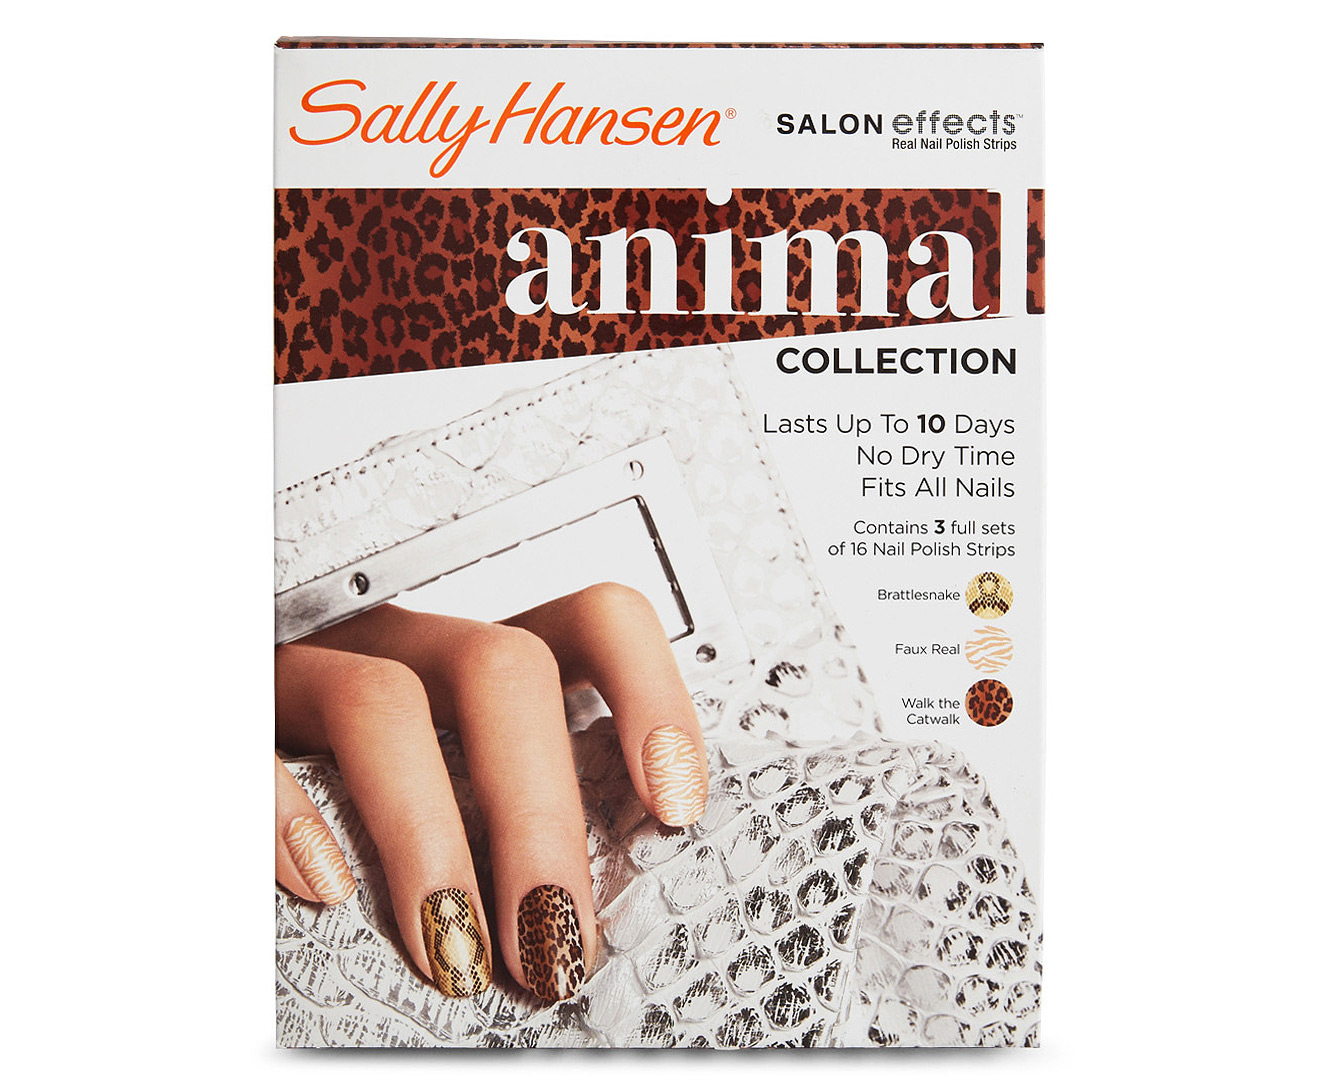 Sally Hansen Salon Effects Real Nail Polish Strips - wide 8